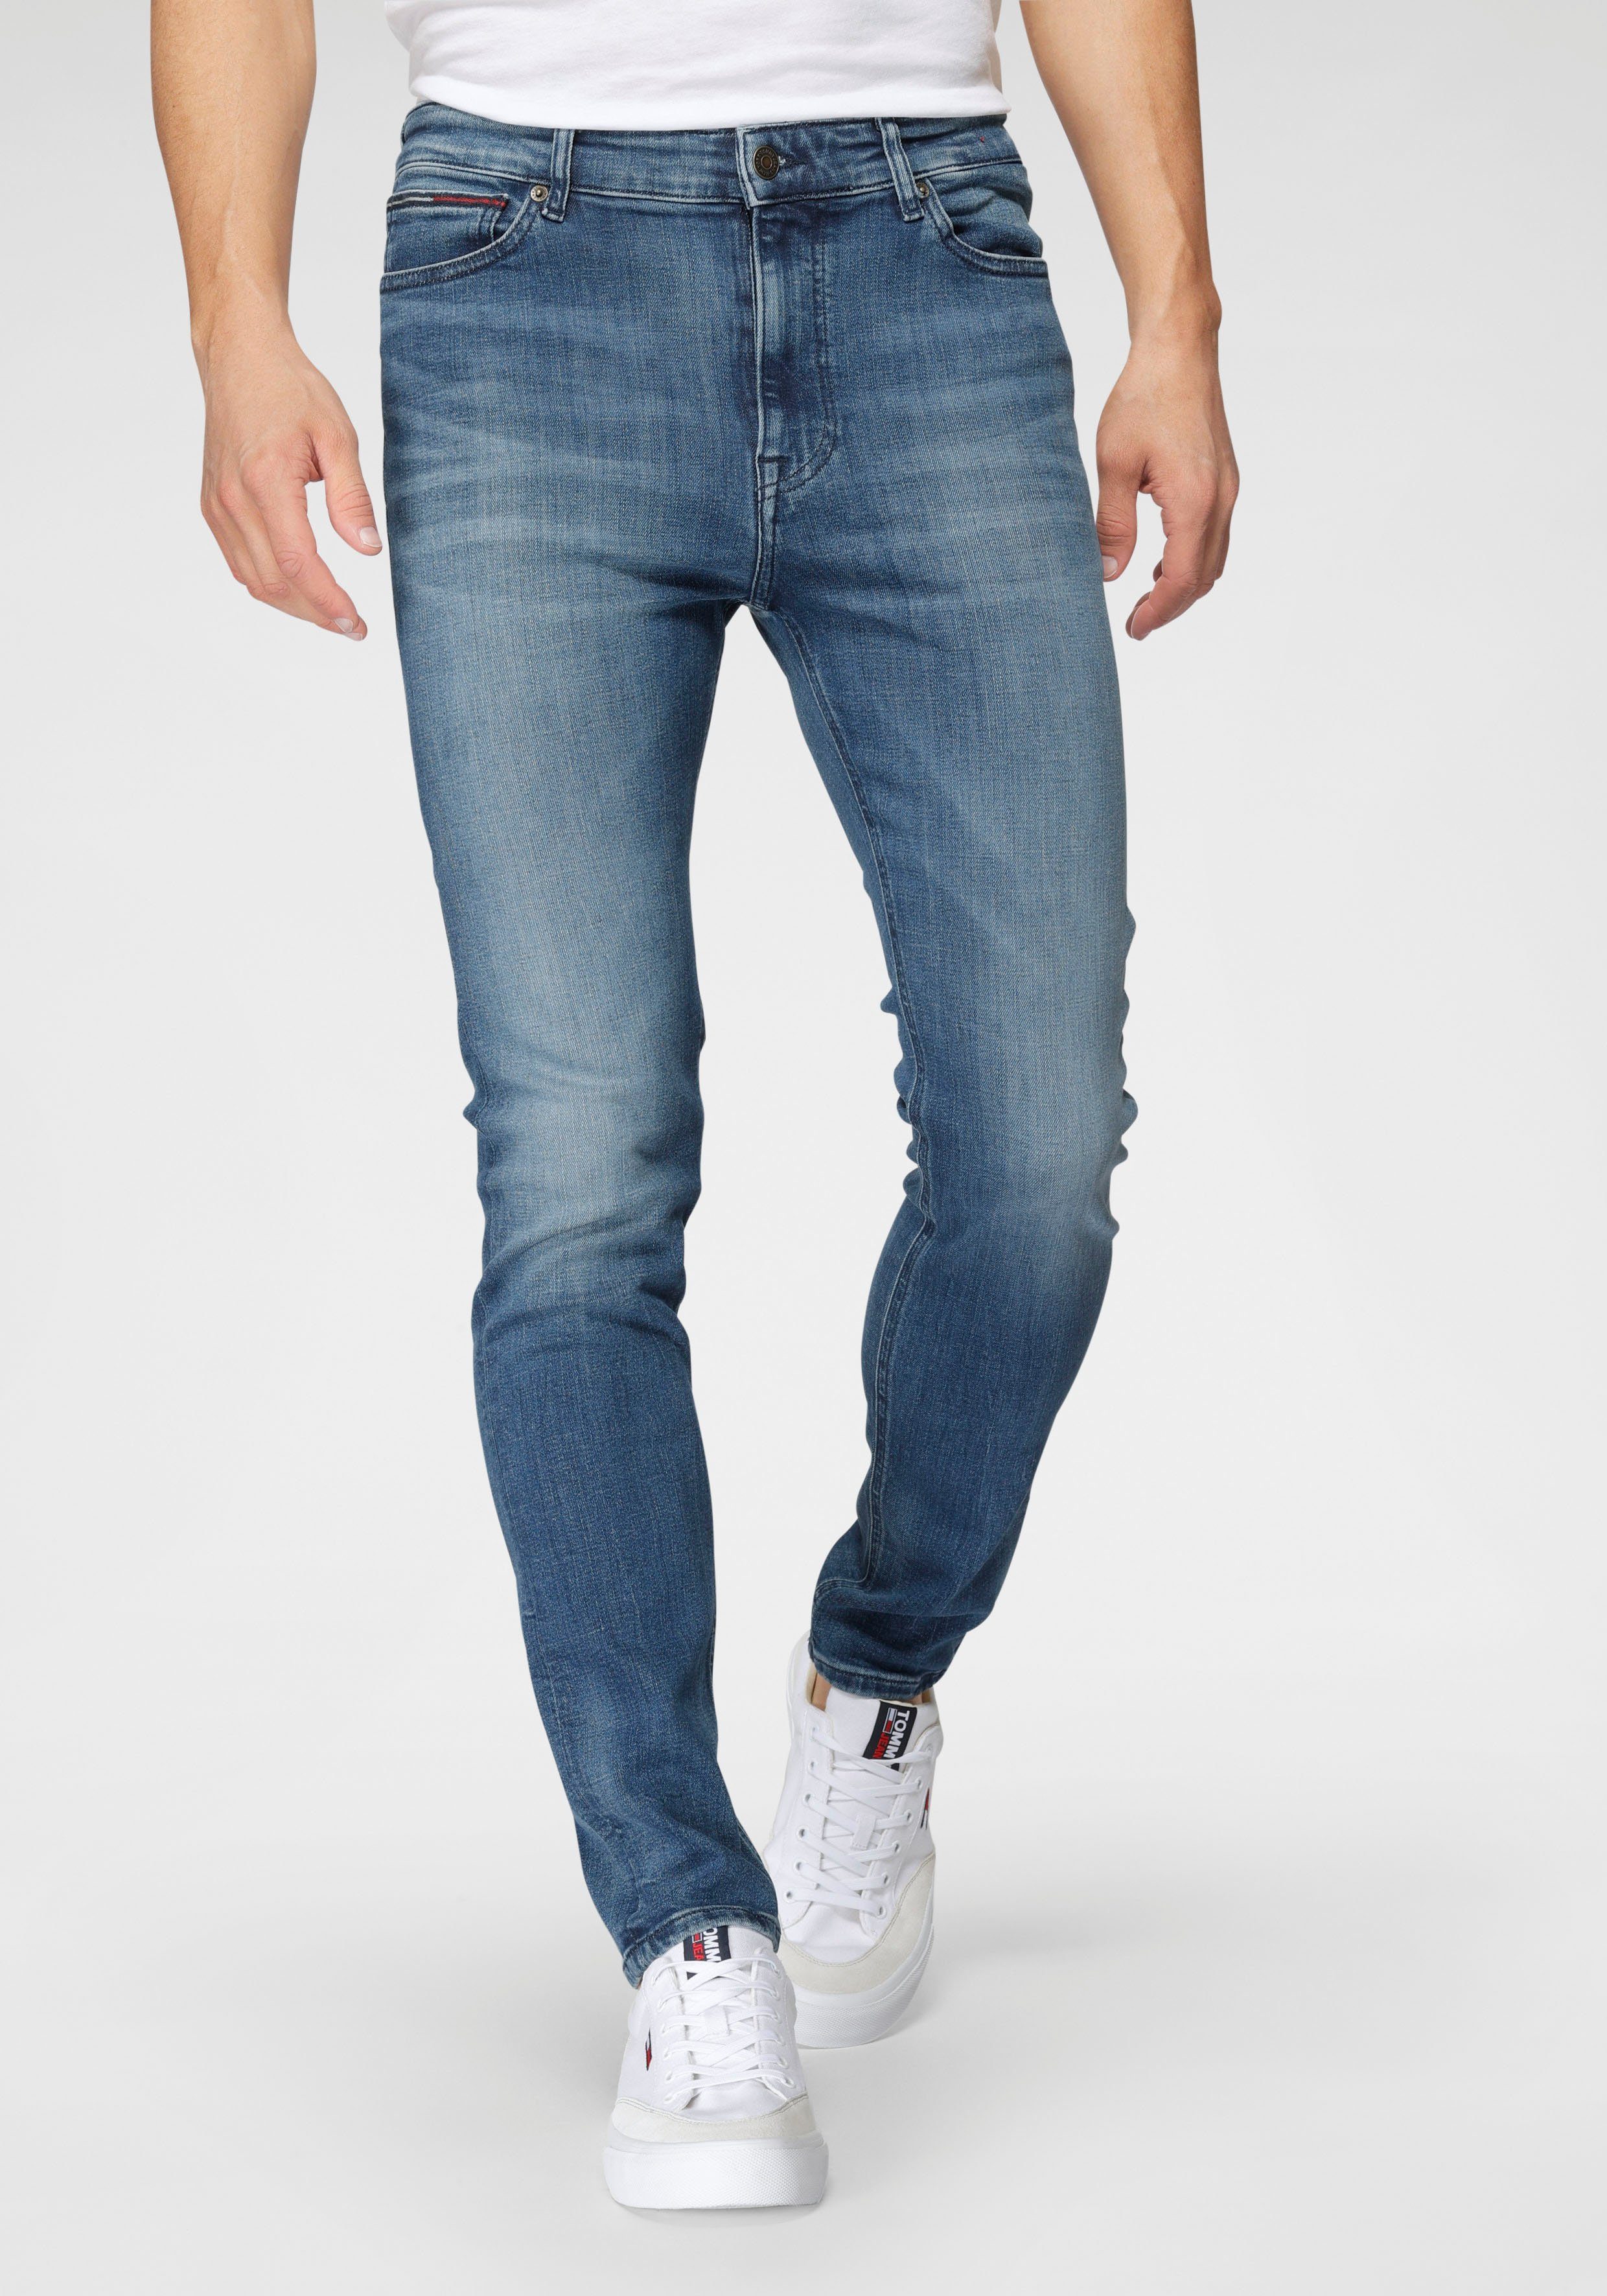 Tommy Jeans Skinny Simon Jeans Blue Dressinn, 51% OFF